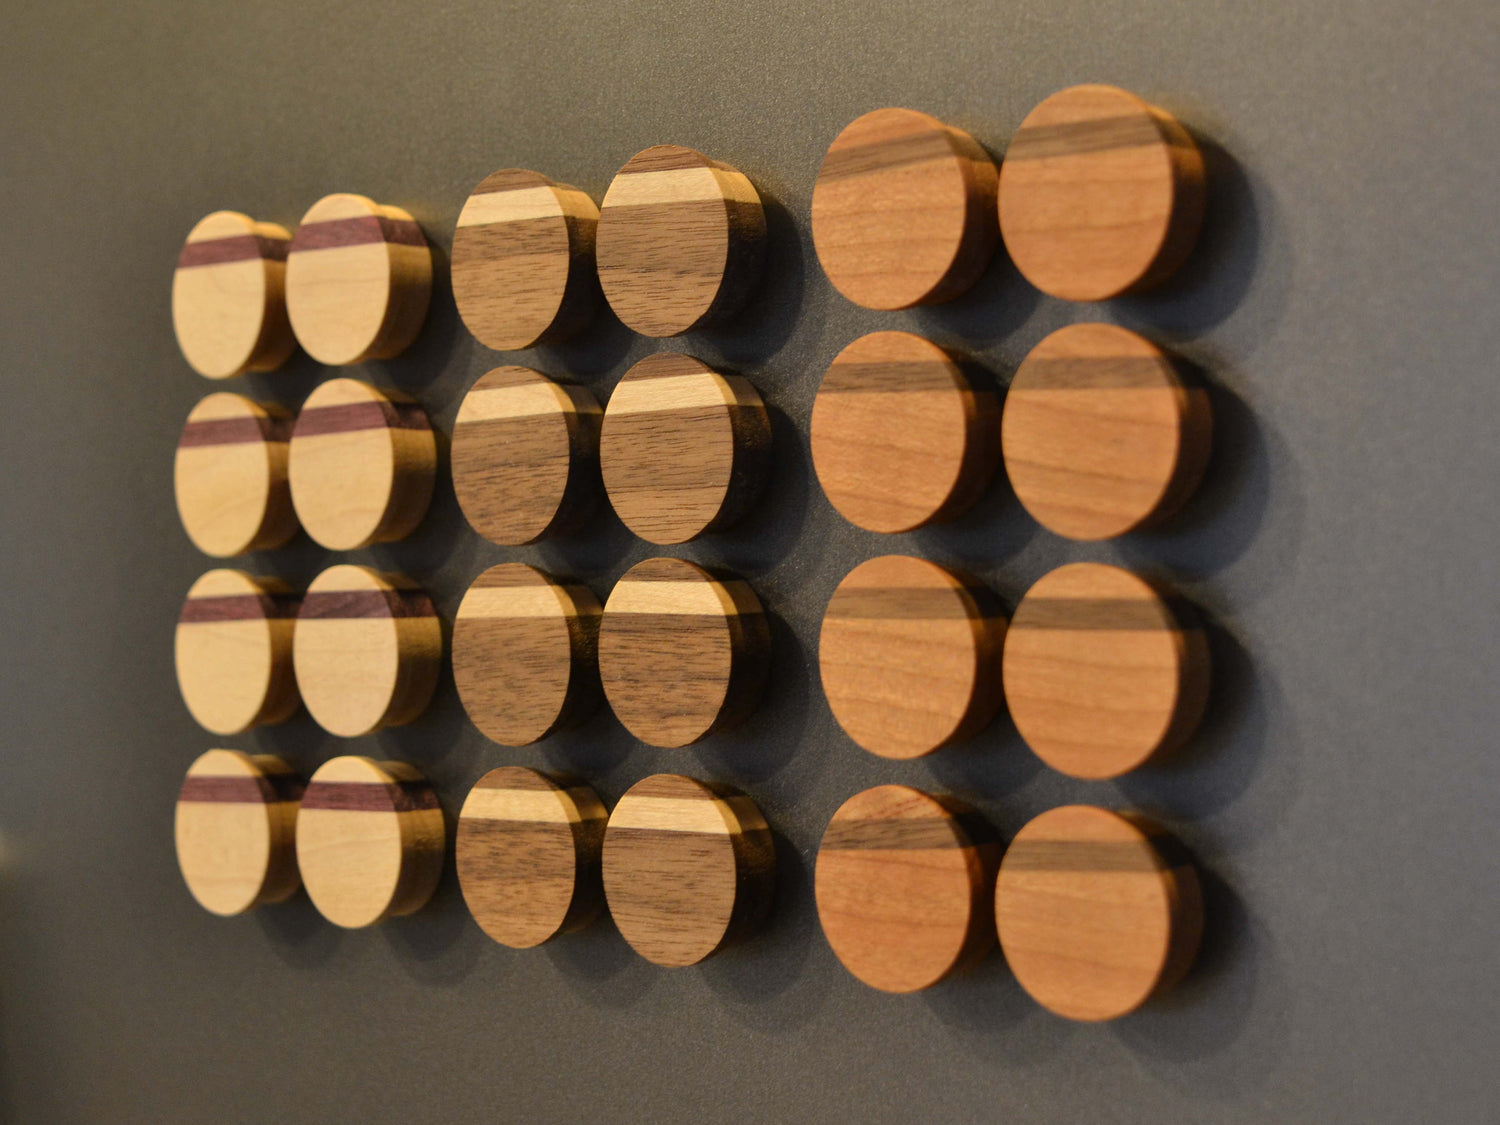 colorful wooden fridge magnets, natural wood grain